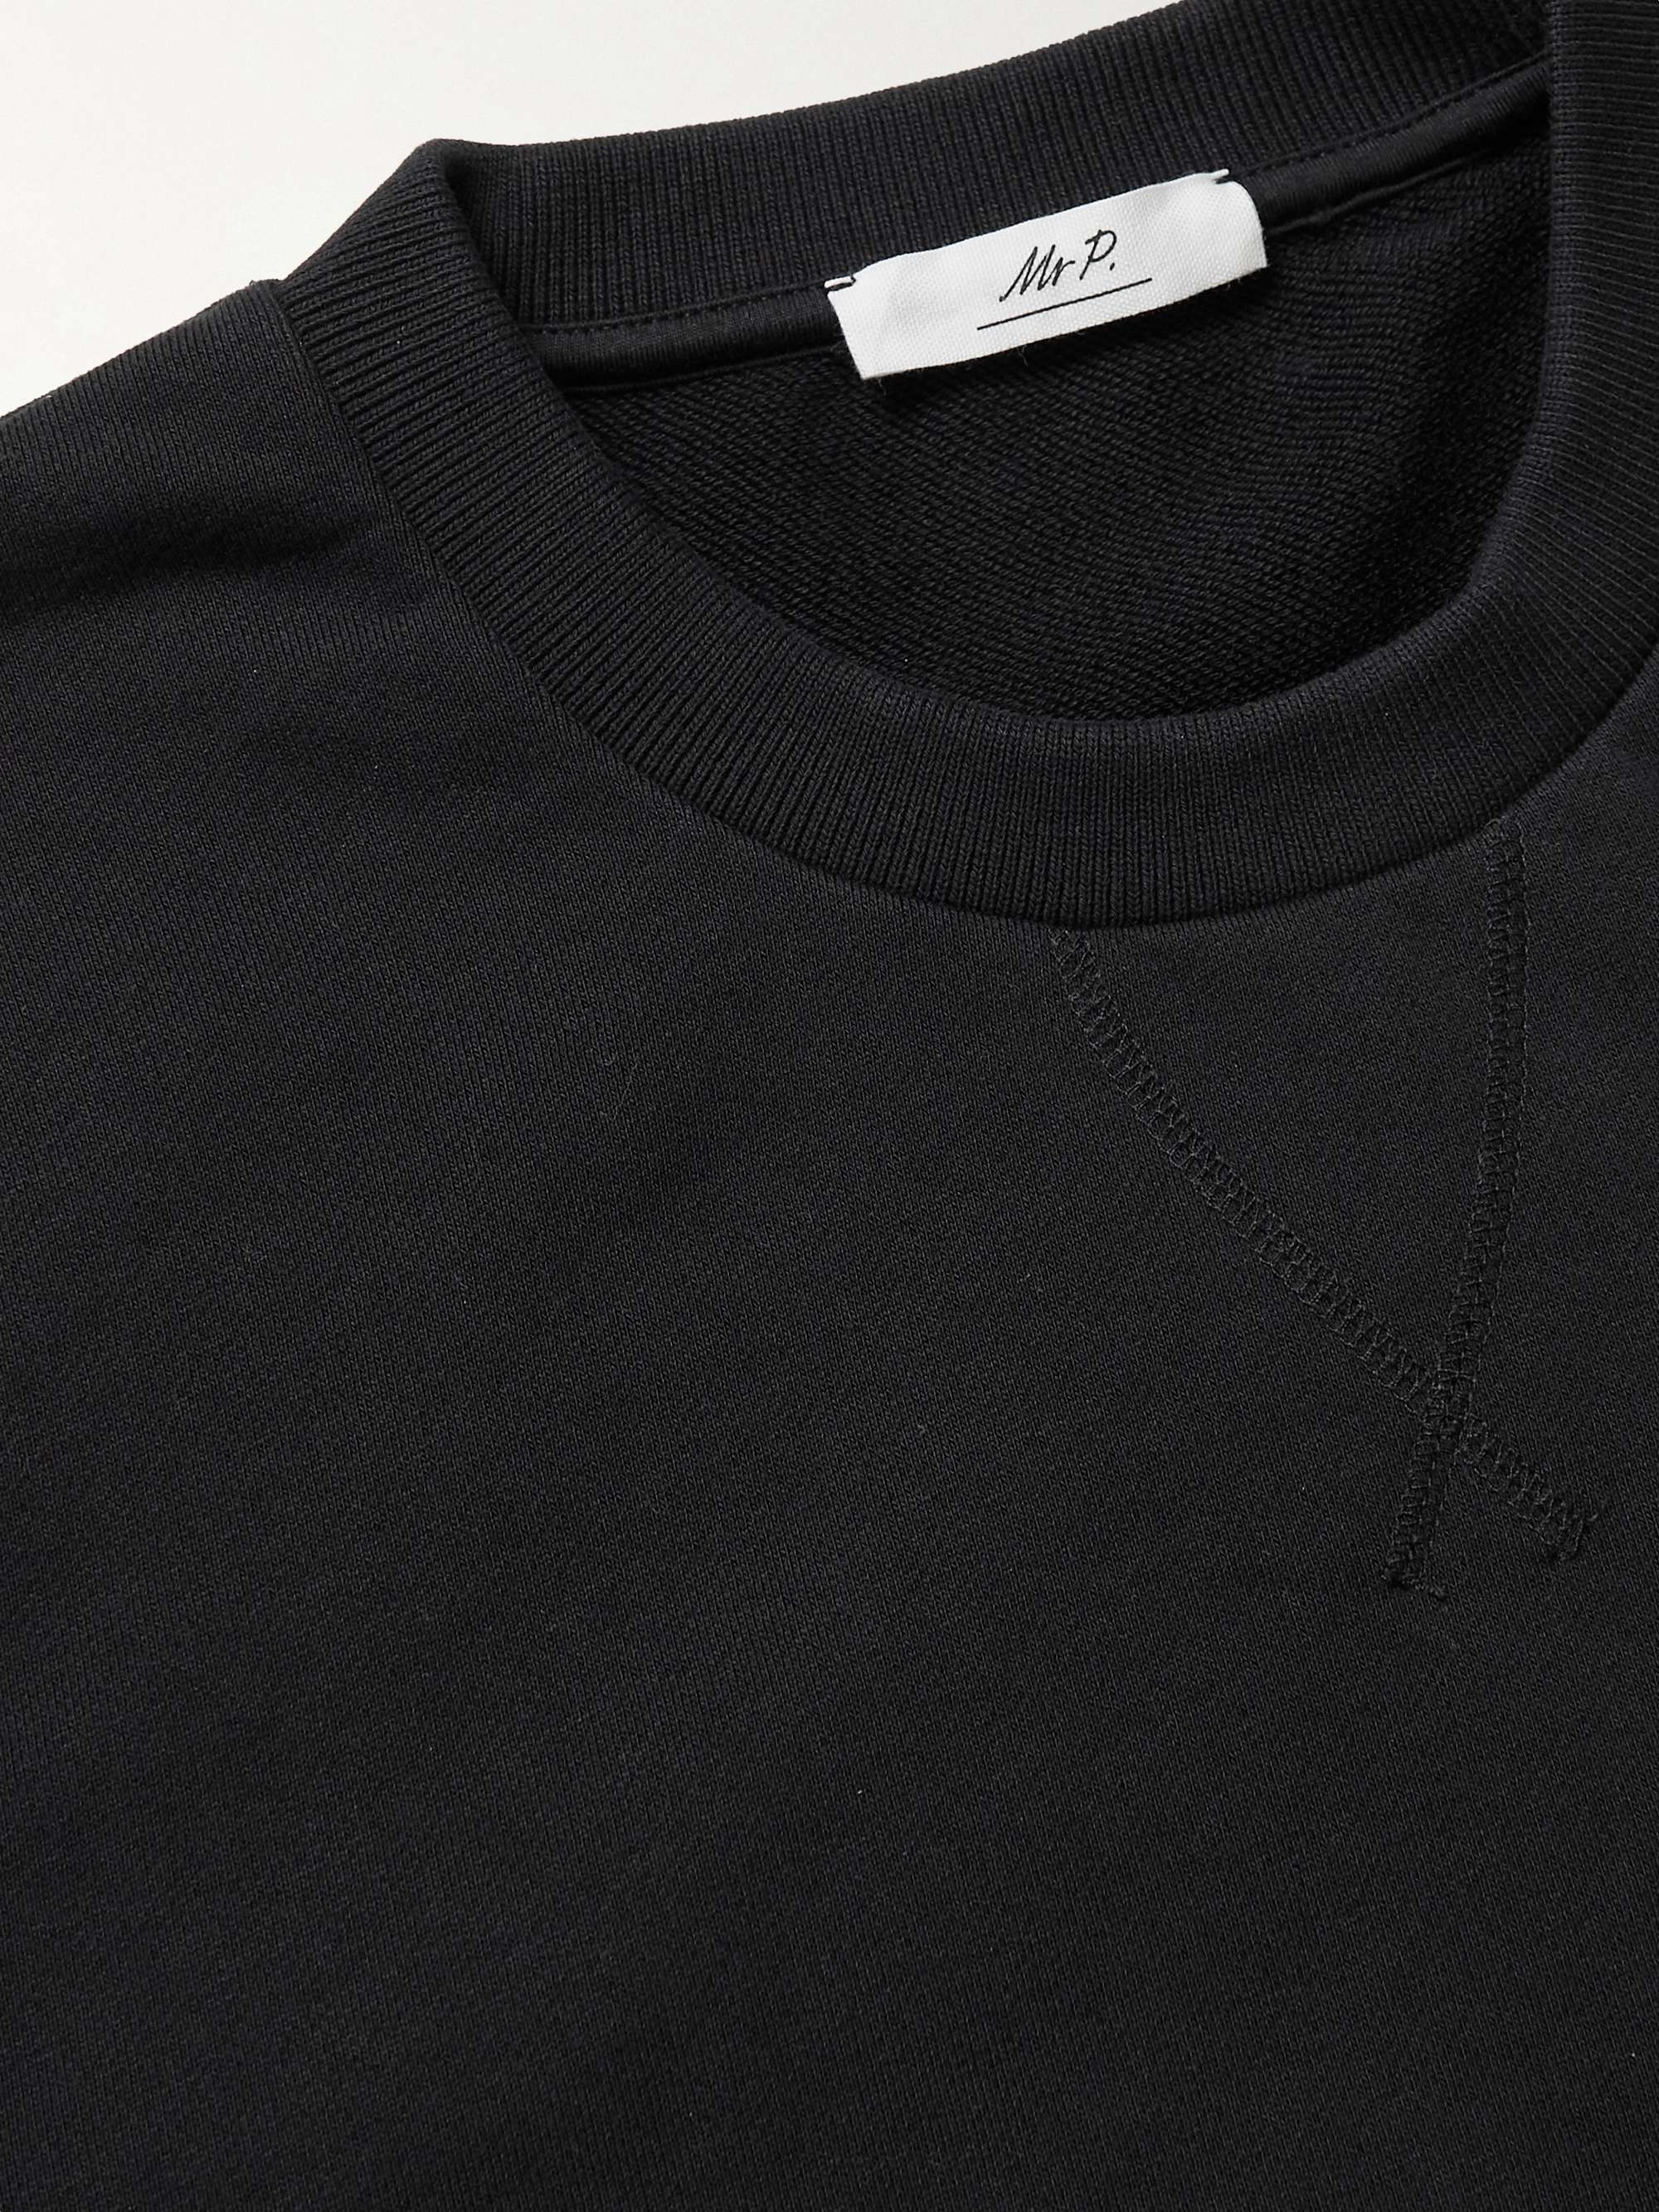 MR P. Organic Cotton-Jersey Sweatshirt for Men | MR PORTER